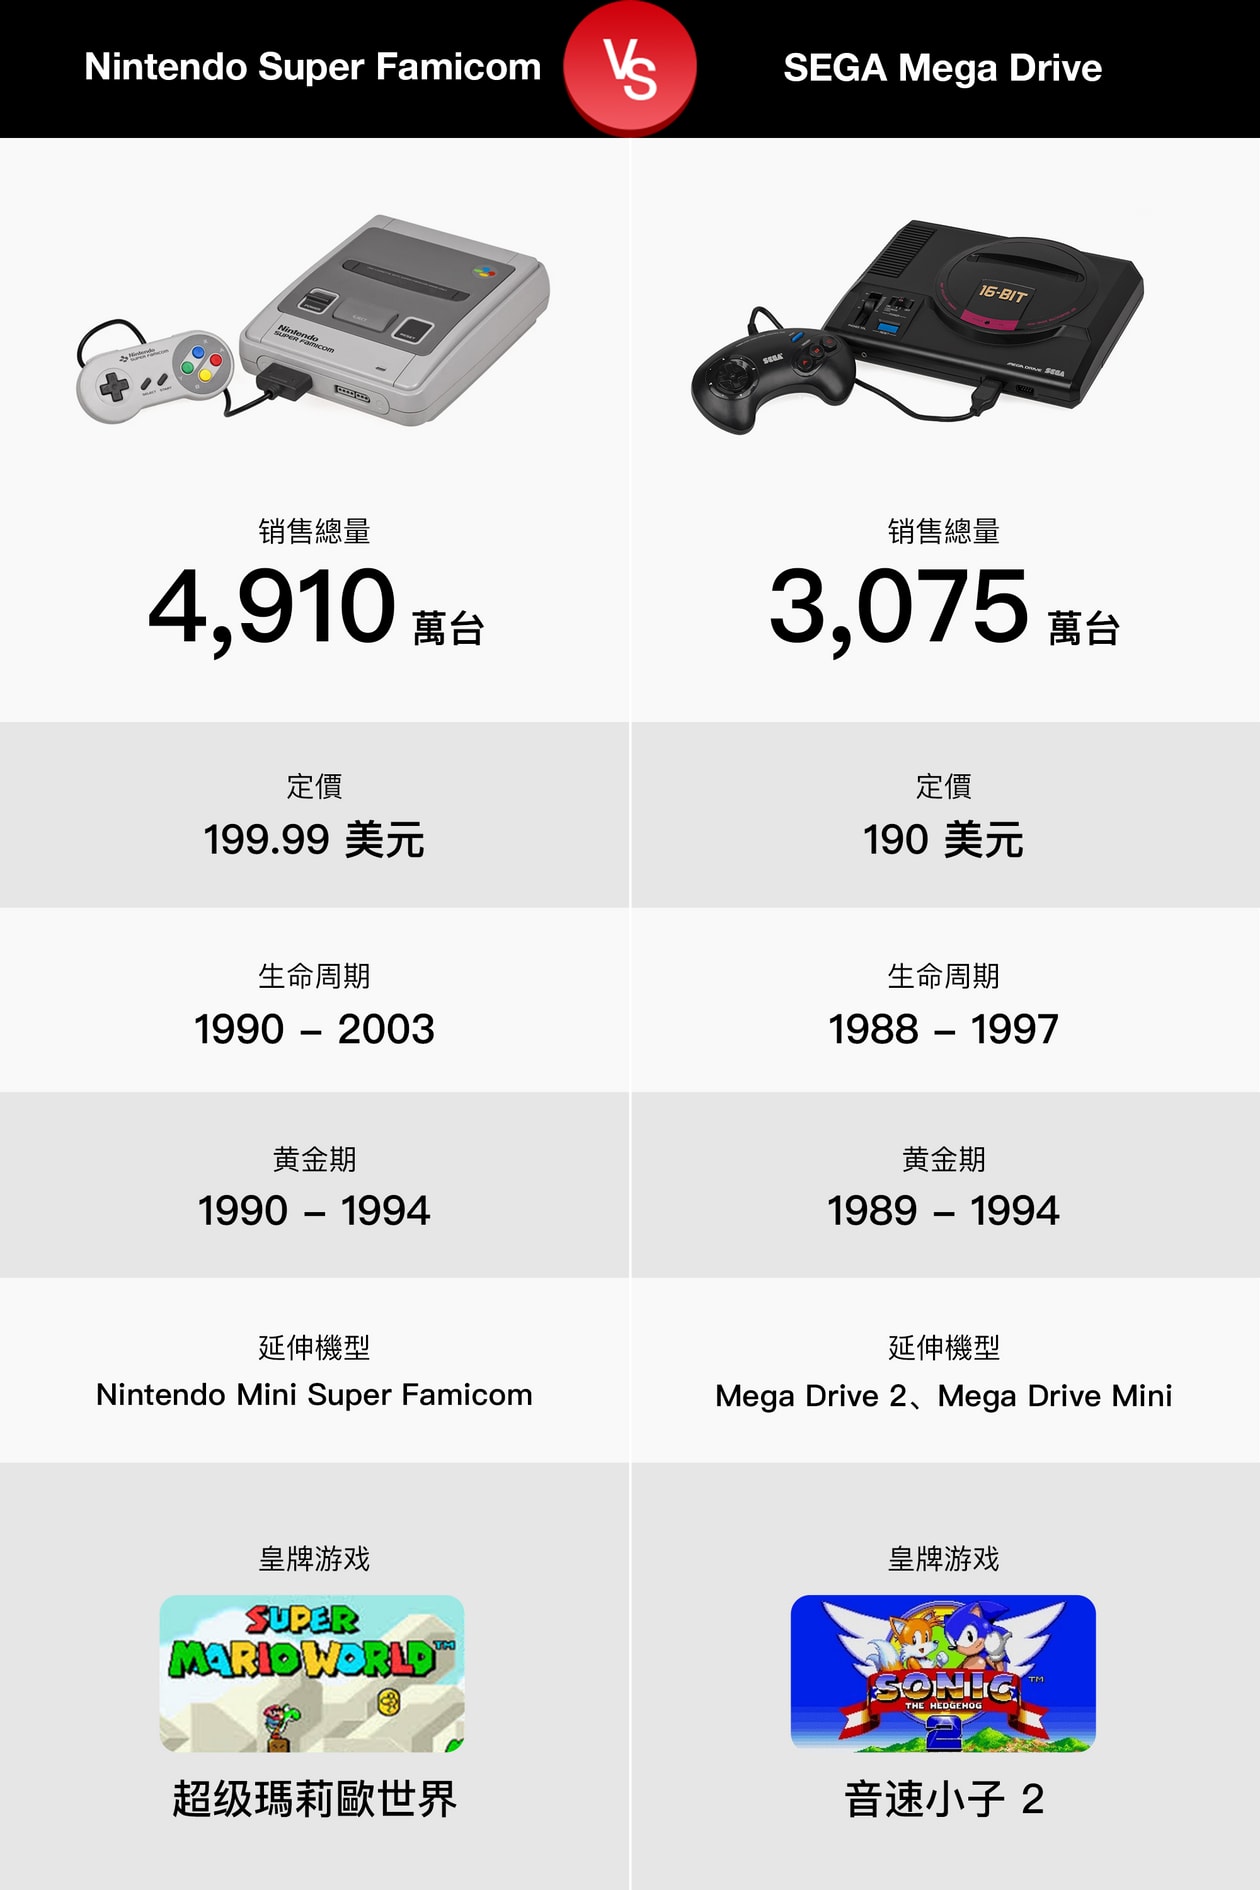 PS5 發售在即－HYPEBEAST 回顧歷代家用主機 PK 榜與遊戲市場的 4 大轉變